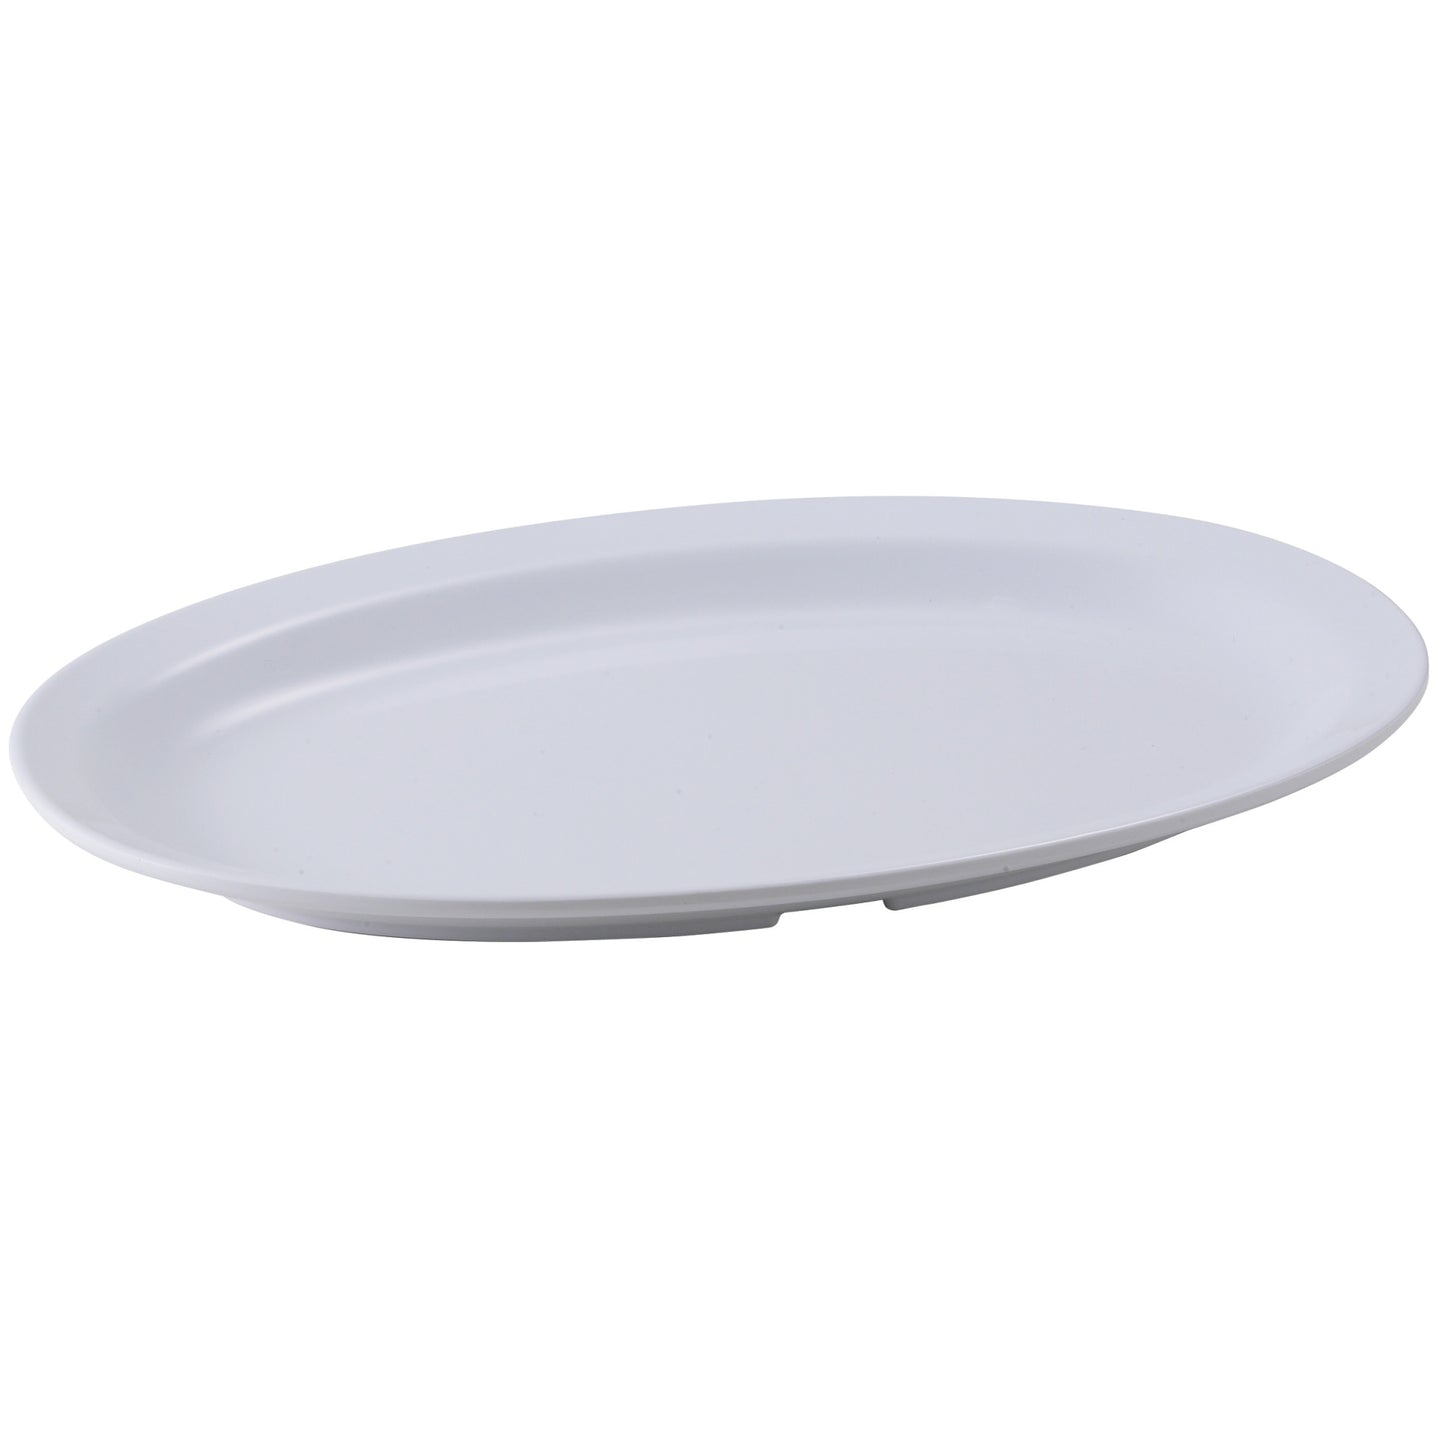 MMPO-118W - Melamine 11-1/2" x 8" Oval Platter - White